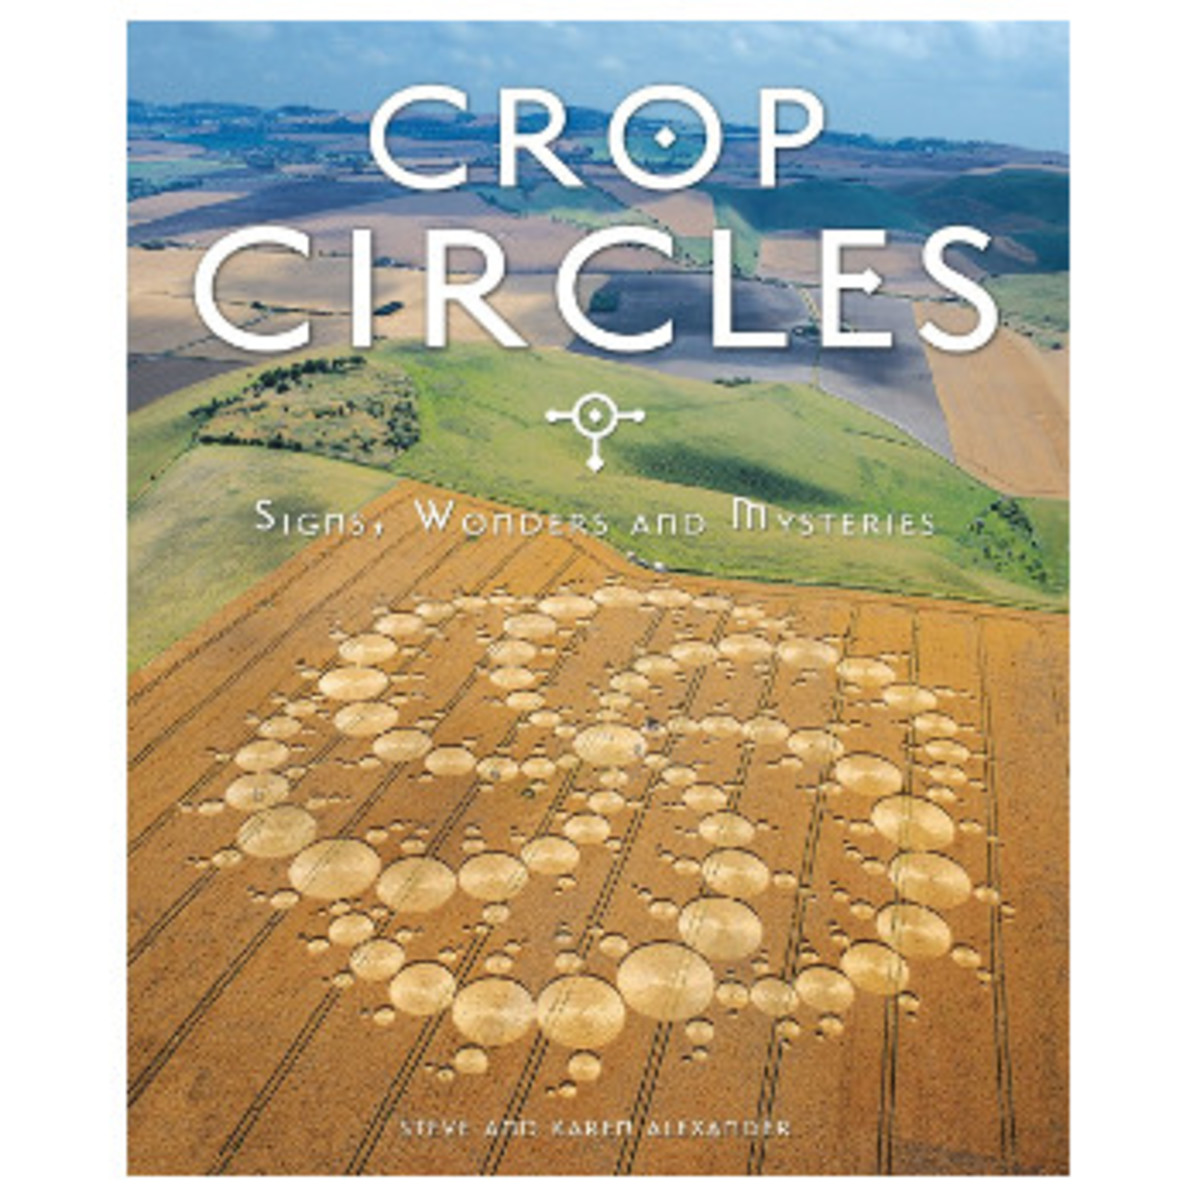 ❂ Watch Crop Circles Being Made